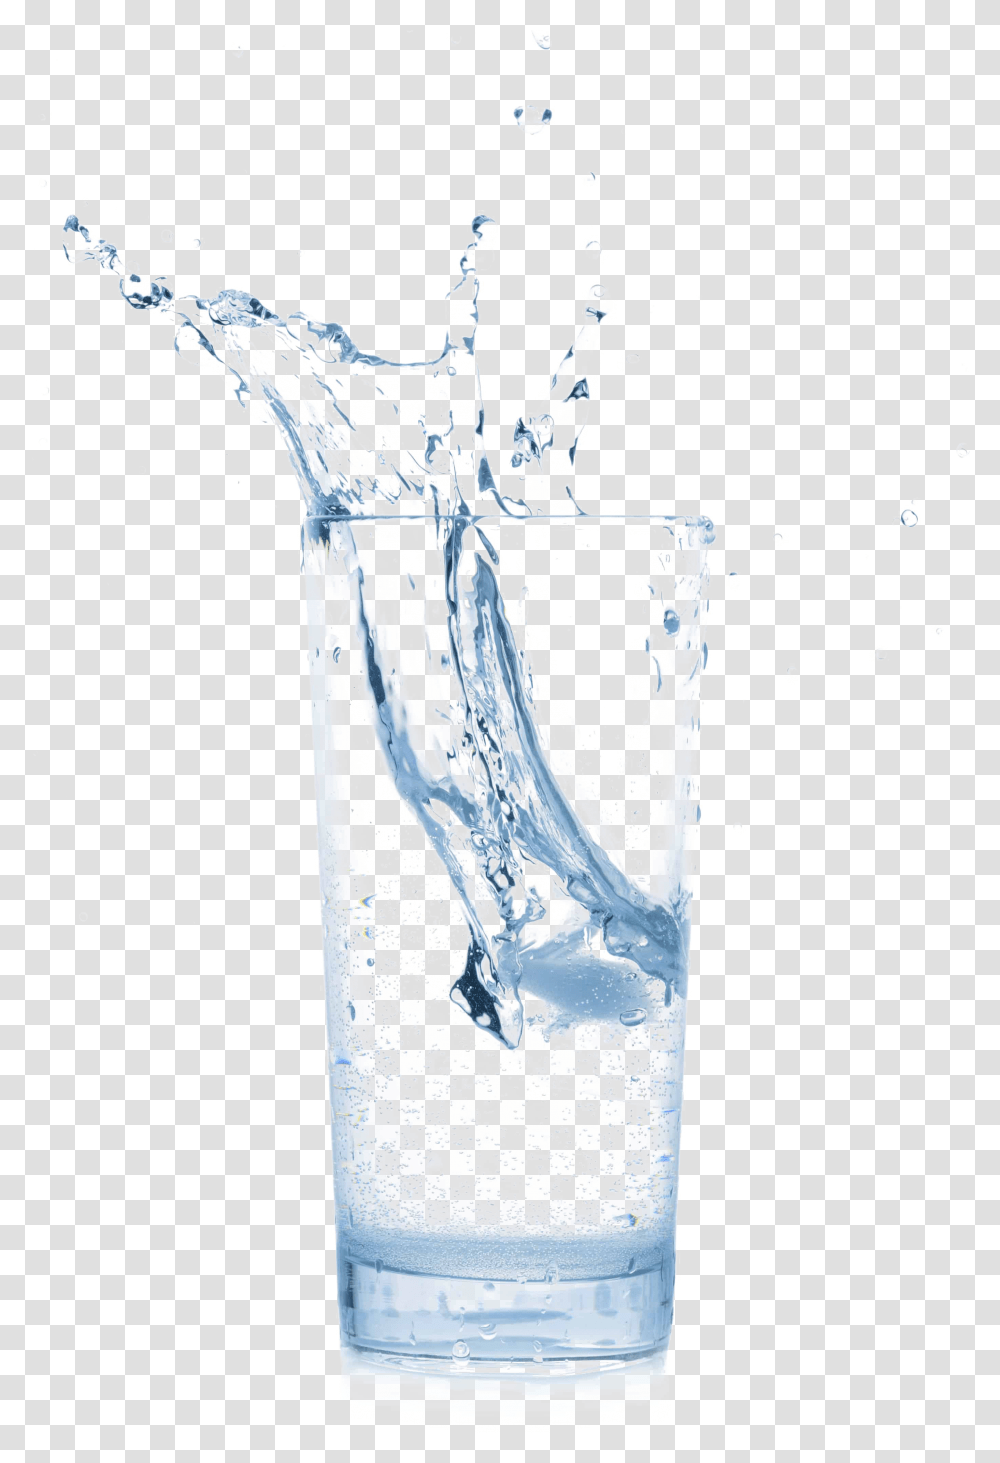 Water Glass Splash Image Water Splashing In Glass, Cross, Beverage, Drink Transparent Png